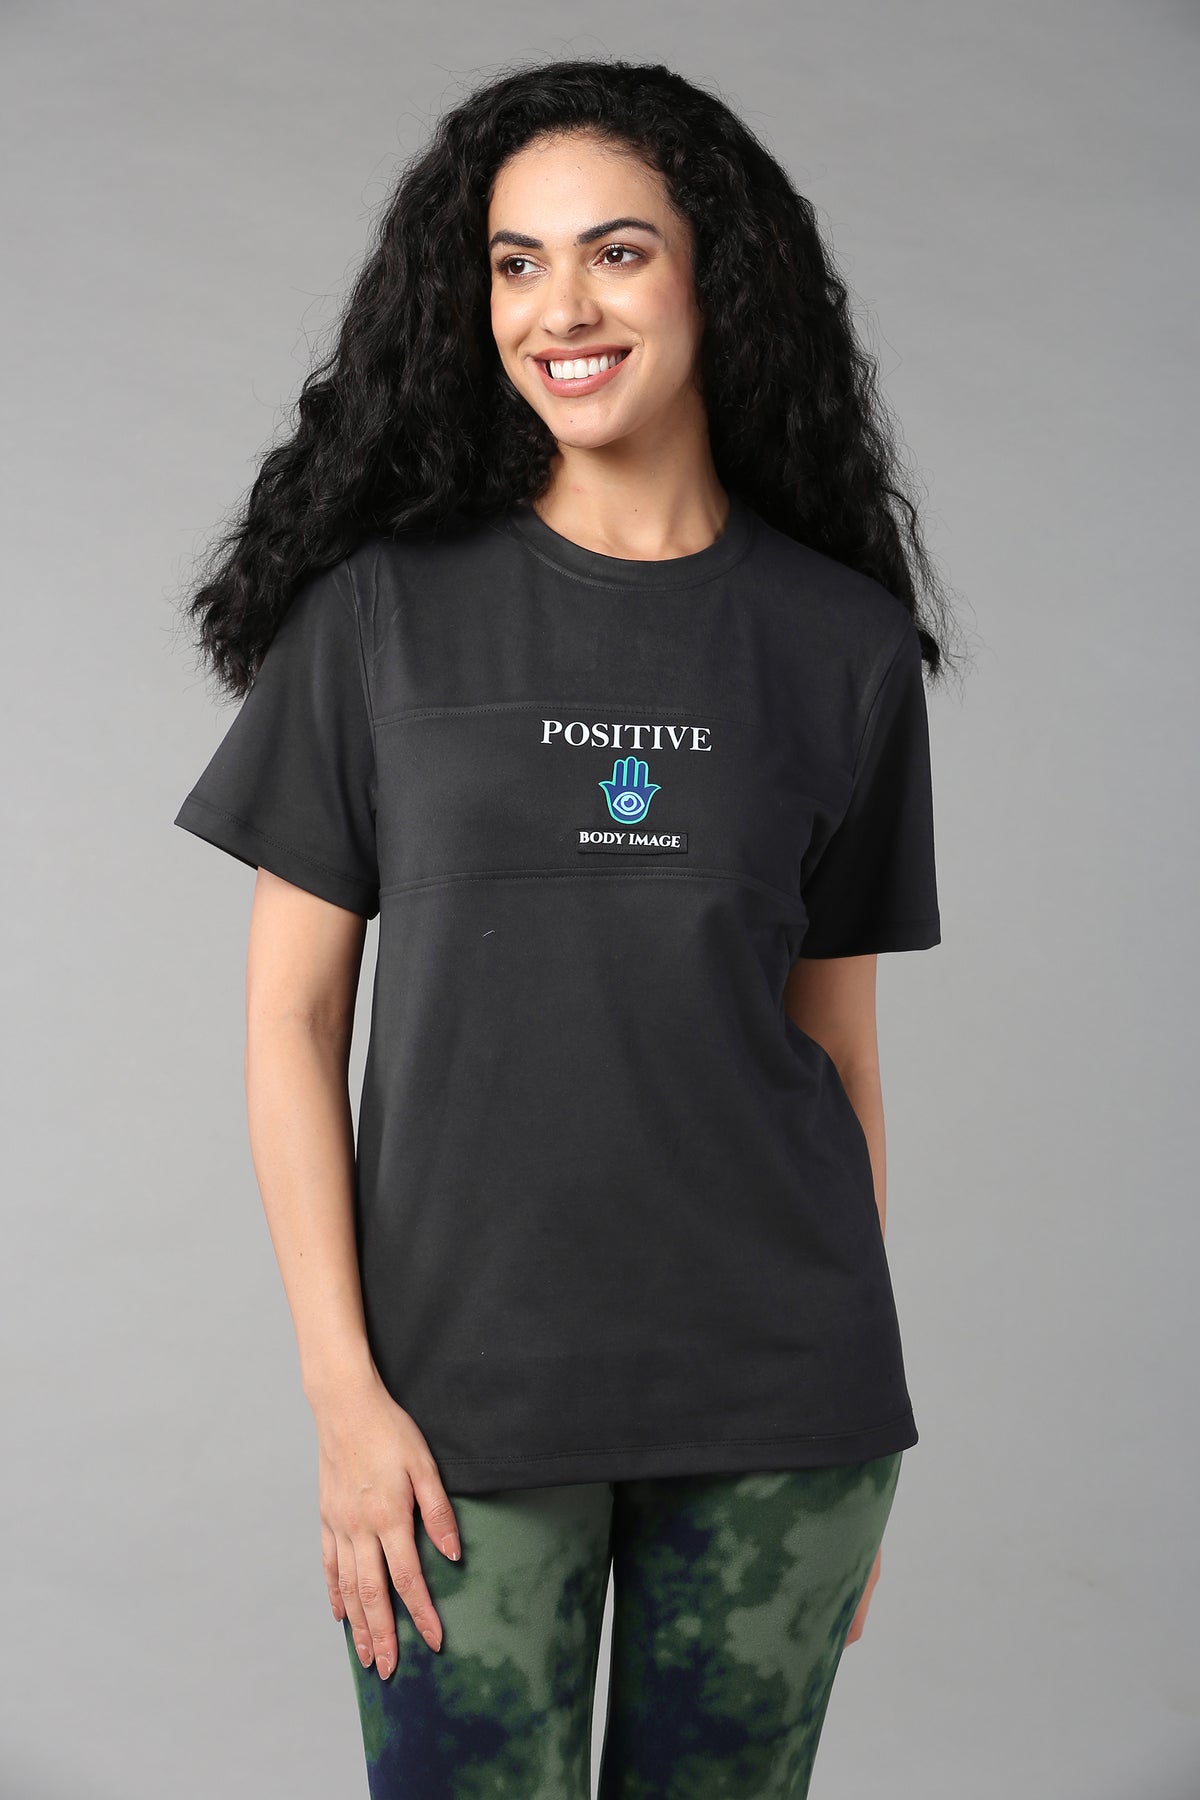 Positive Body image T Shirt